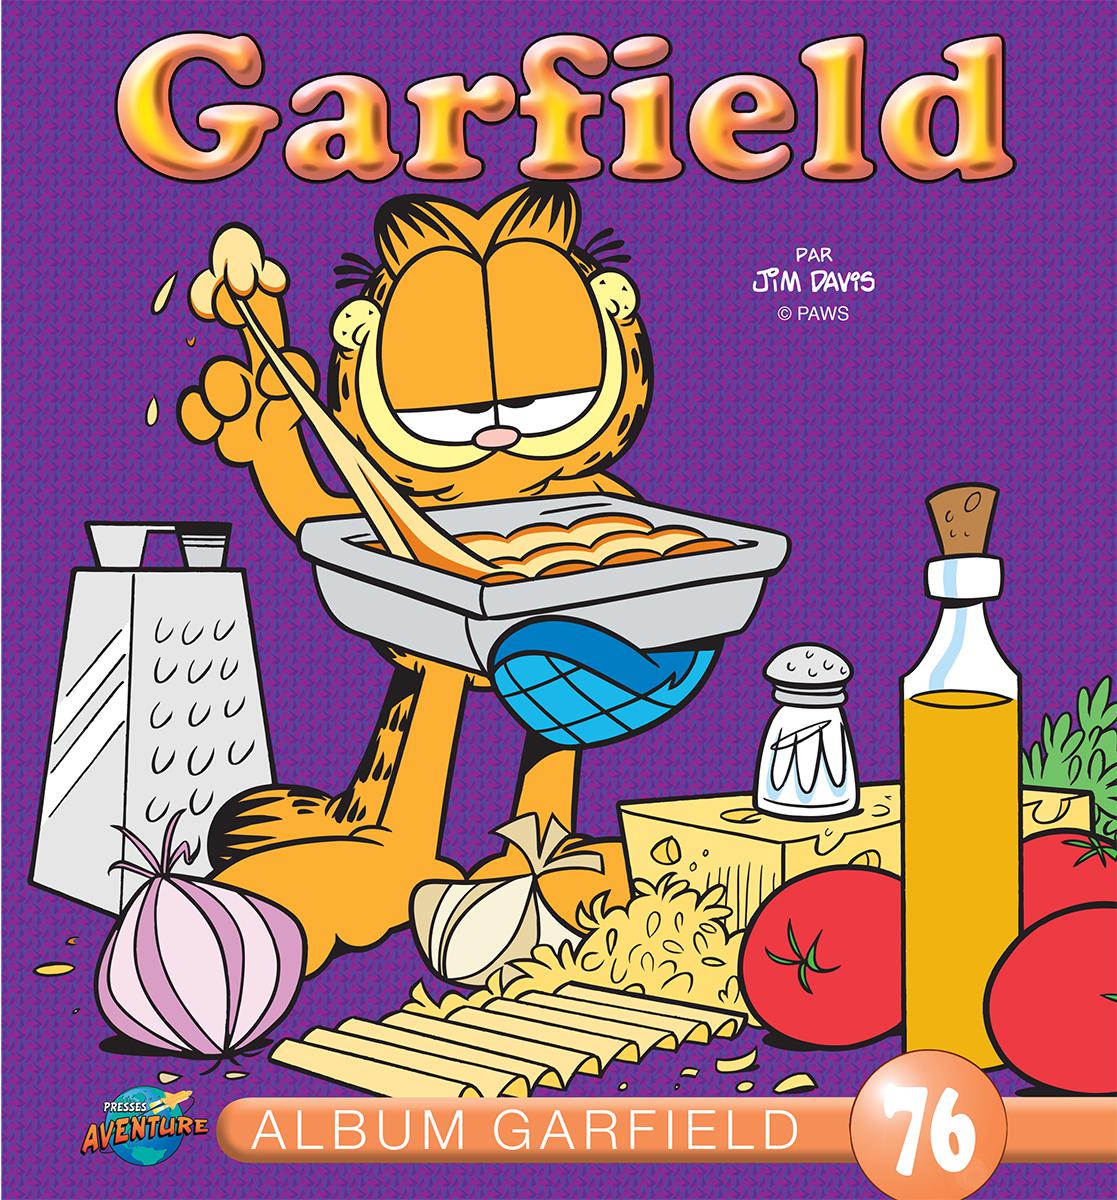  Album Garfield no 76 